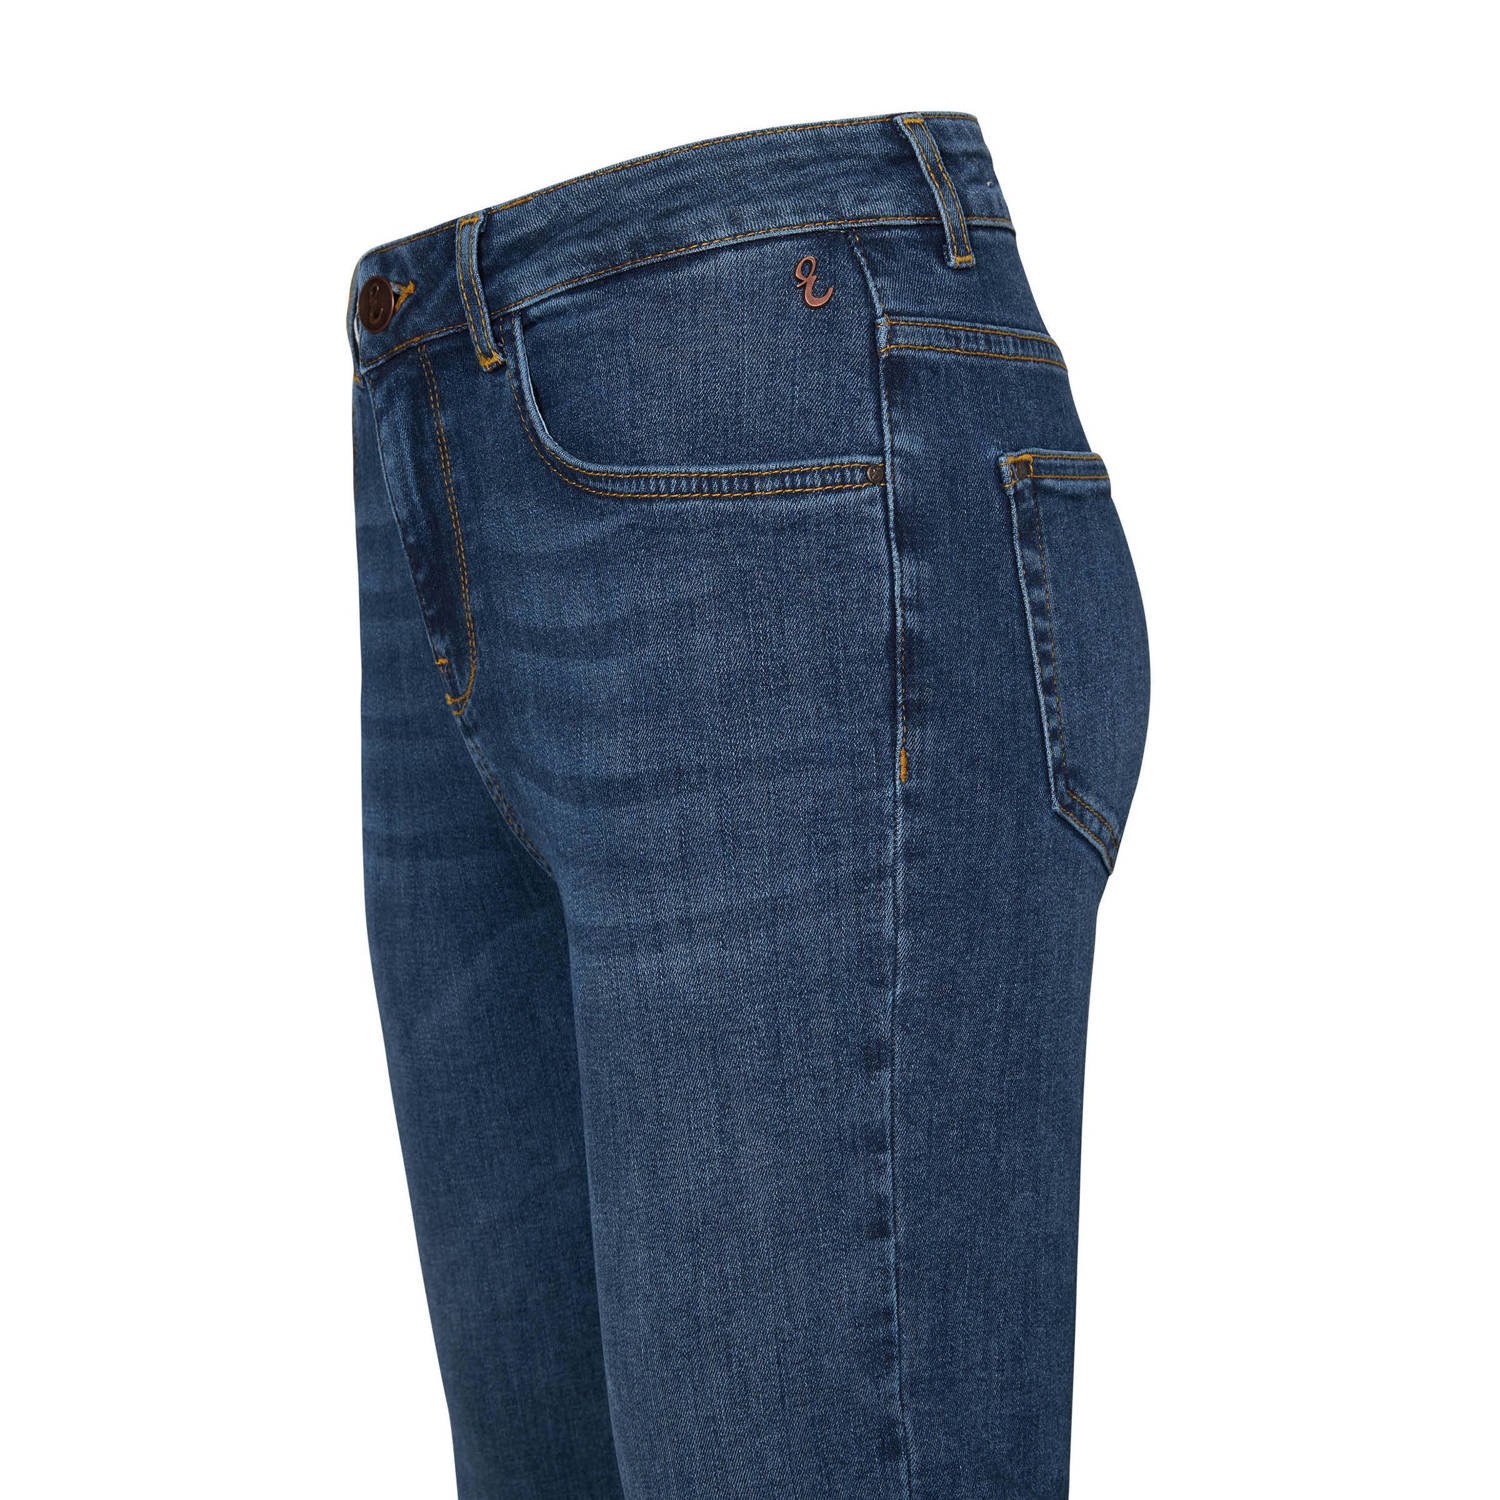 Miss Etam flared jeans Jackie denim Flared LW medim blue denim